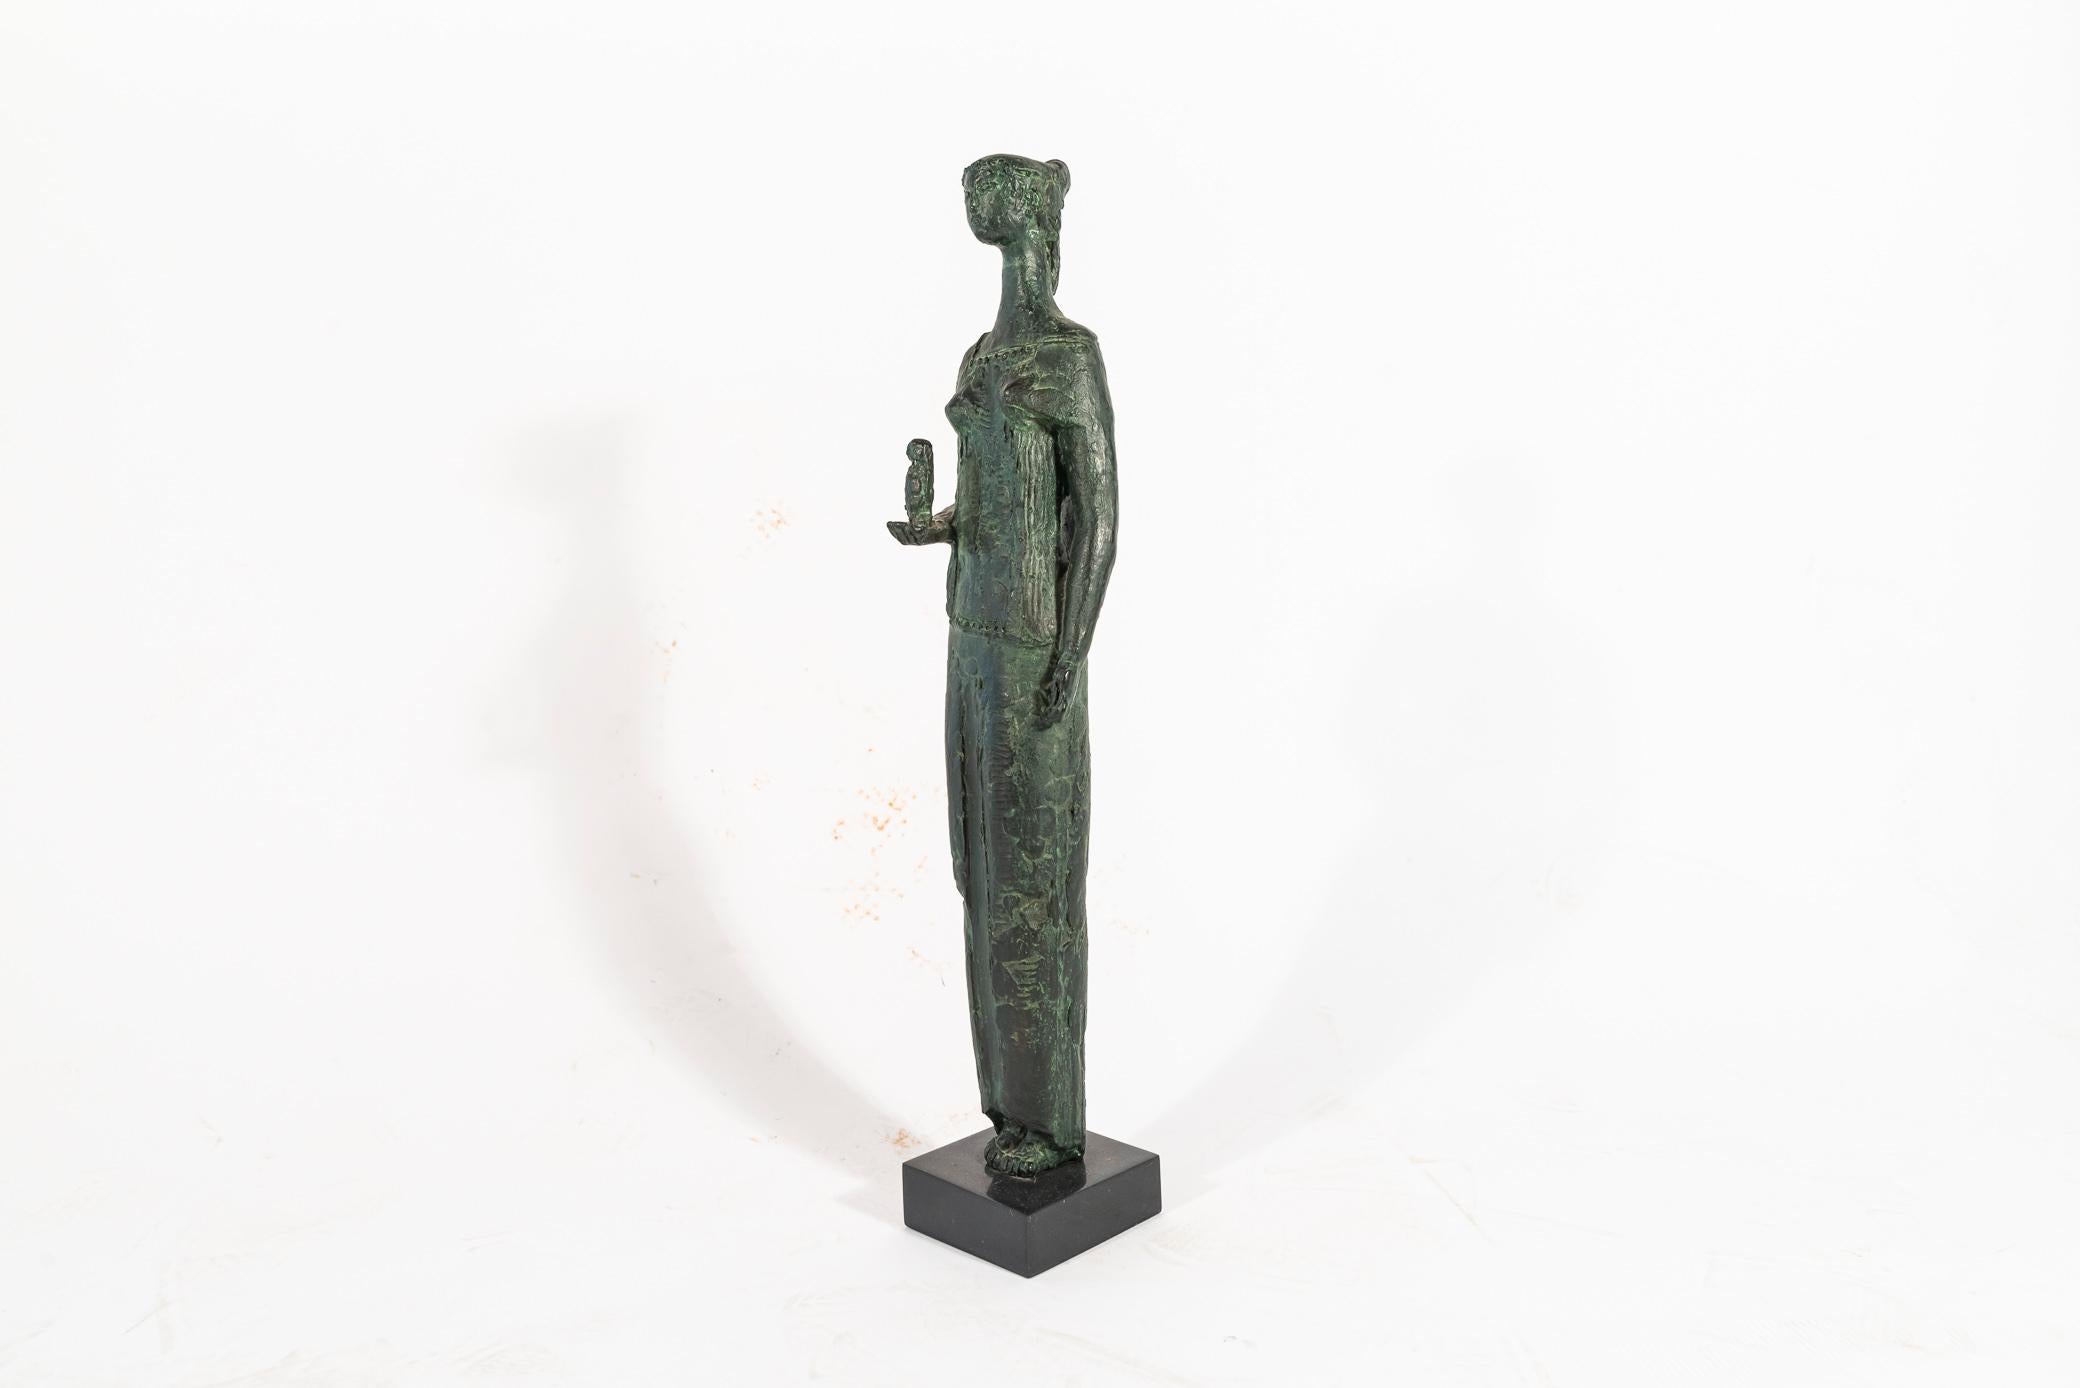 Antoniucci Volti (1915-1989),
Athena sculpture,
Resin, antique green patina,
Museum's proof,
Stamped 